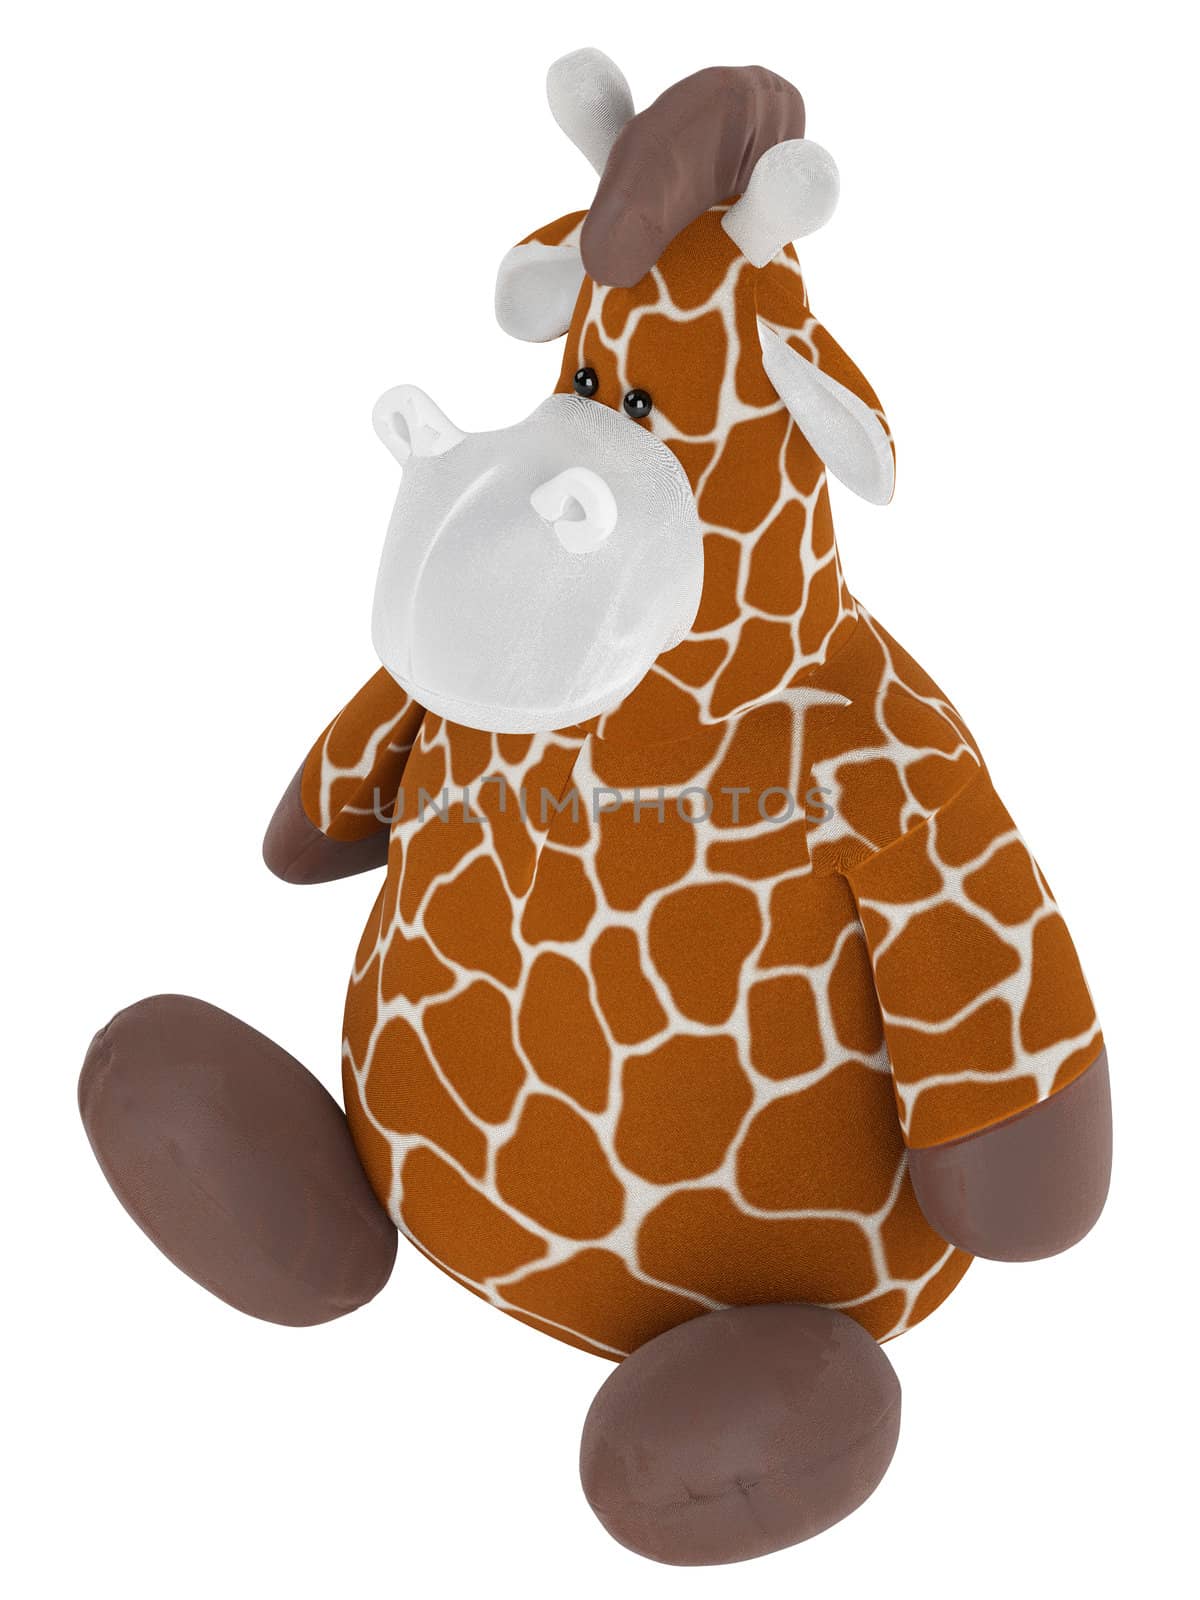 Adorable fat stuffed giraffe by AlexanderMorozov